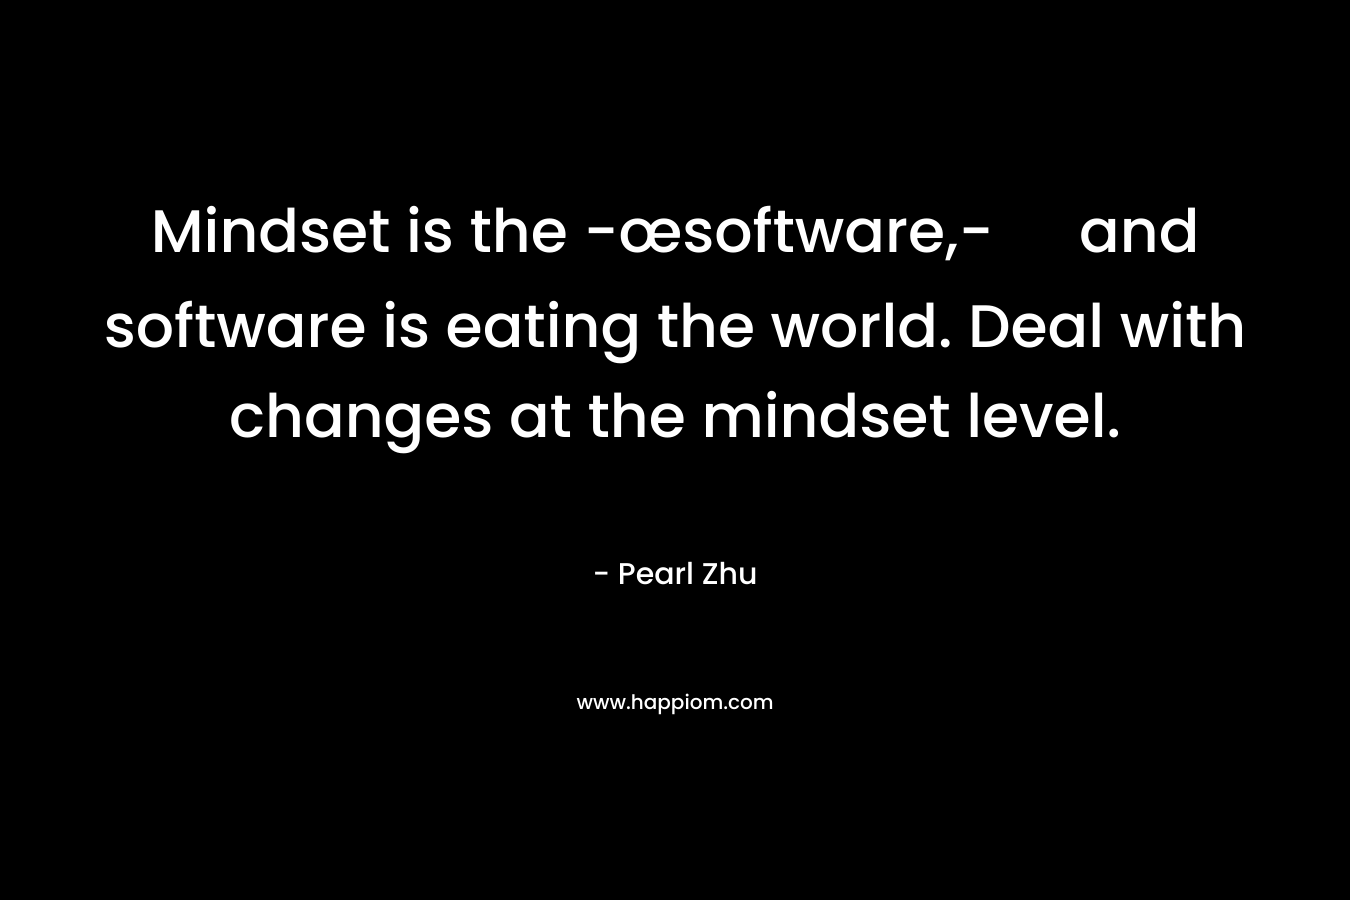 Mindset is the -œsoftware,- and software is eating the world. Deal with changes at the mindset level.